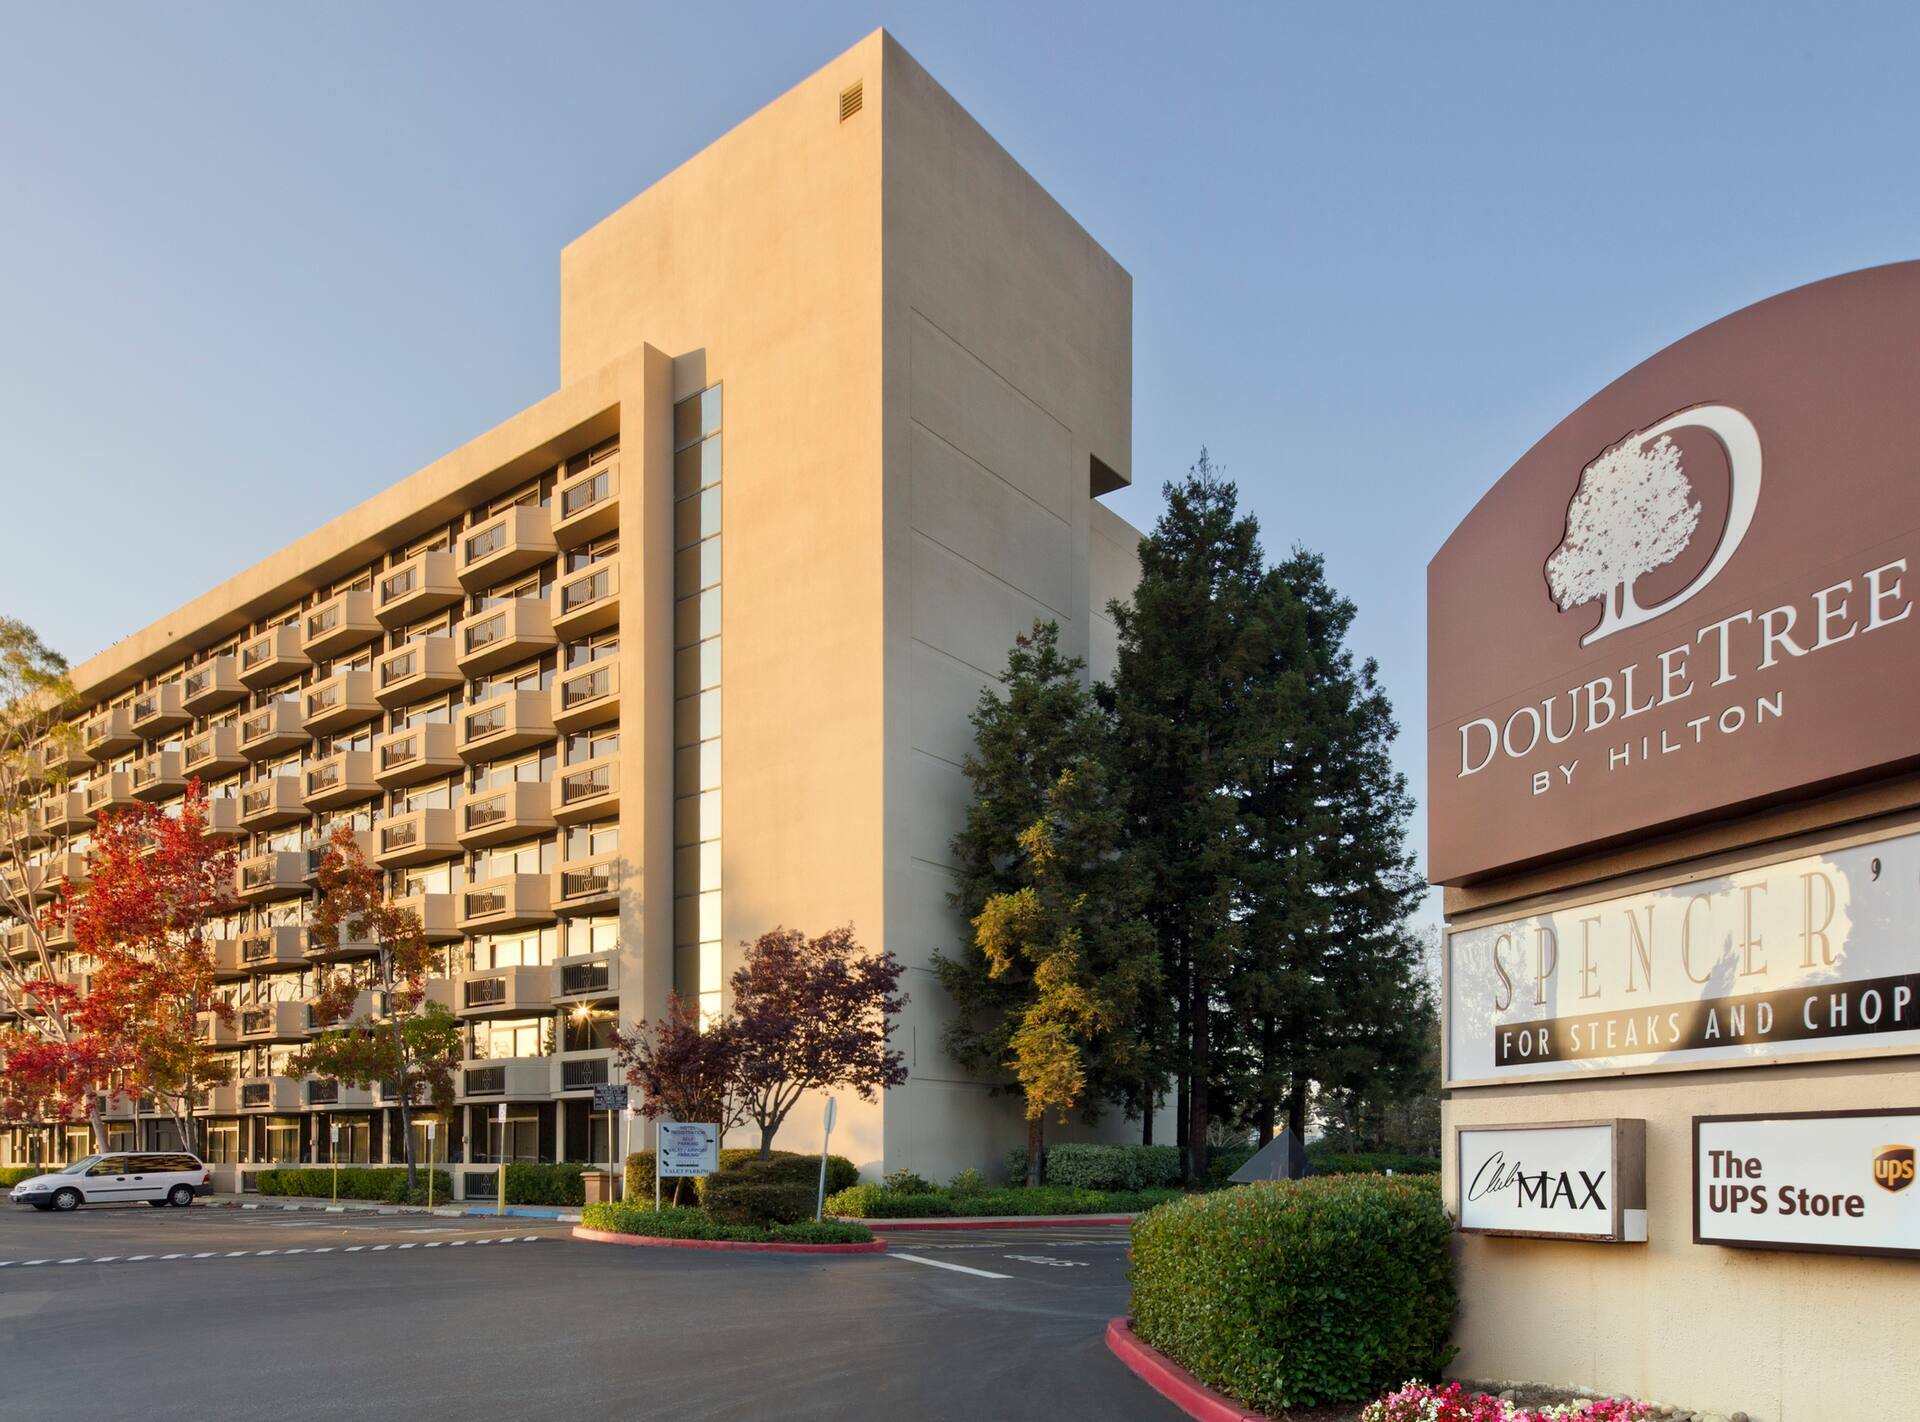 Photo of DoubleTree by Hilton Hotel San Jose, San Jose, CA